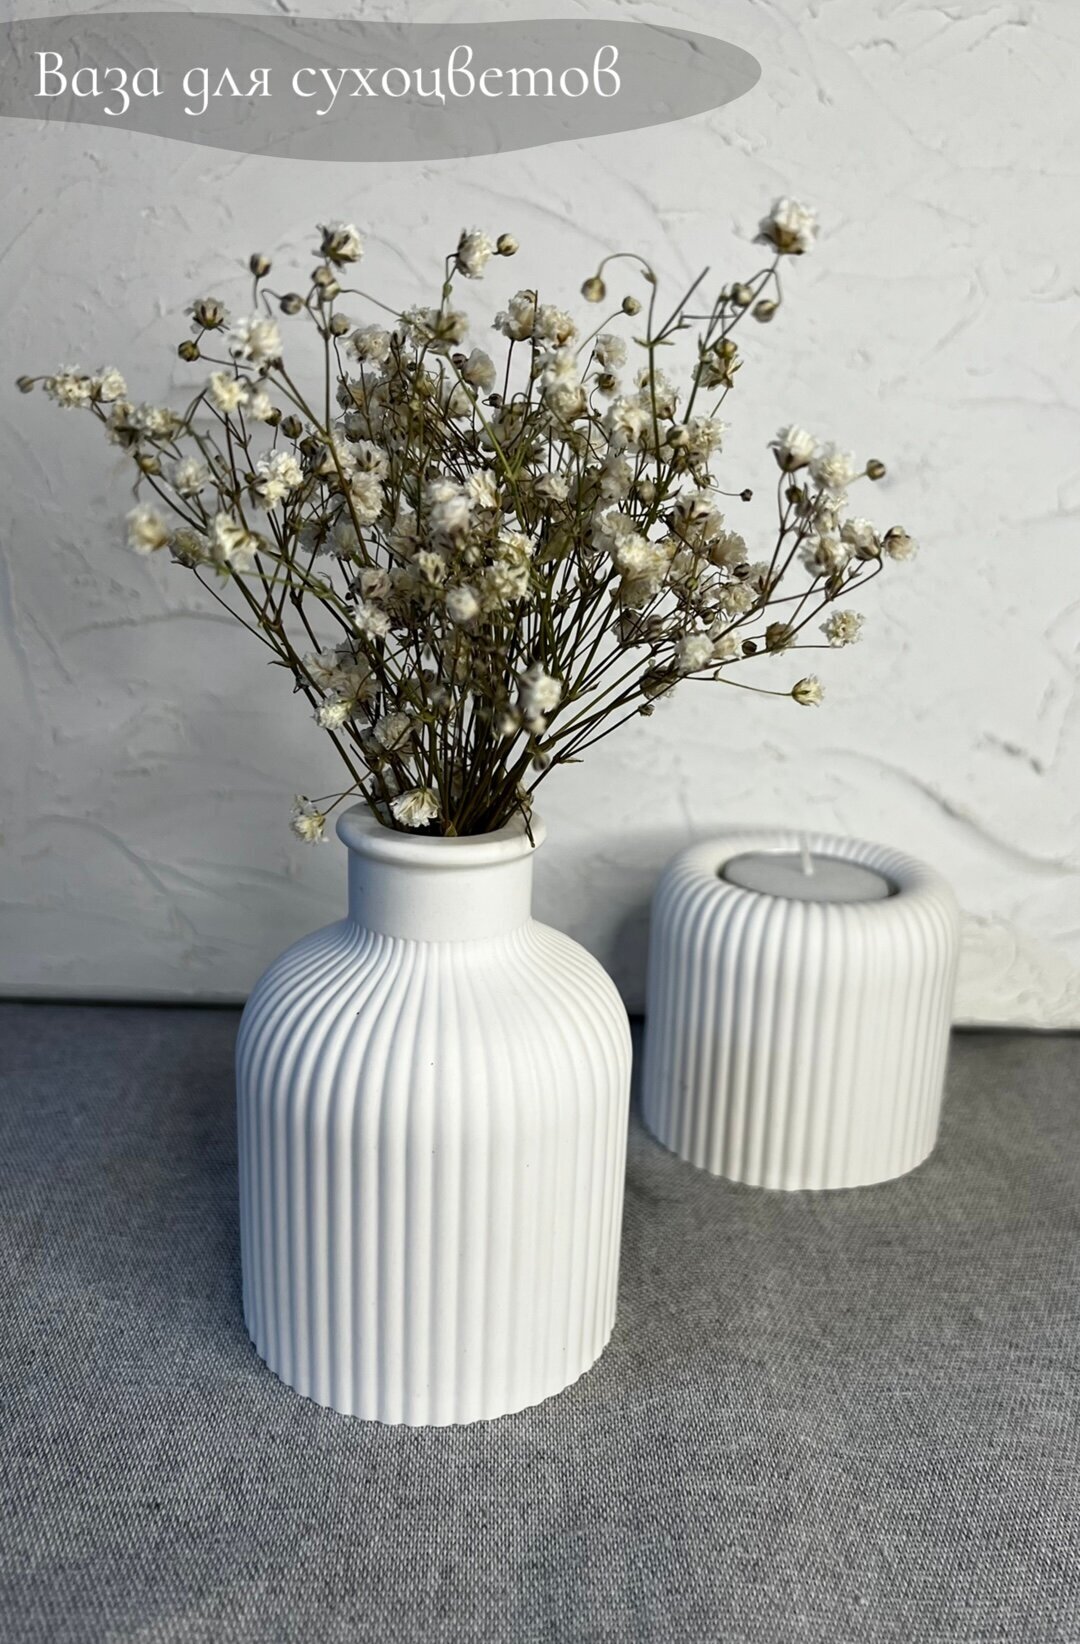 Ваза для сухоцветов из гипса, ваза декоративная, ваза "Сканди"